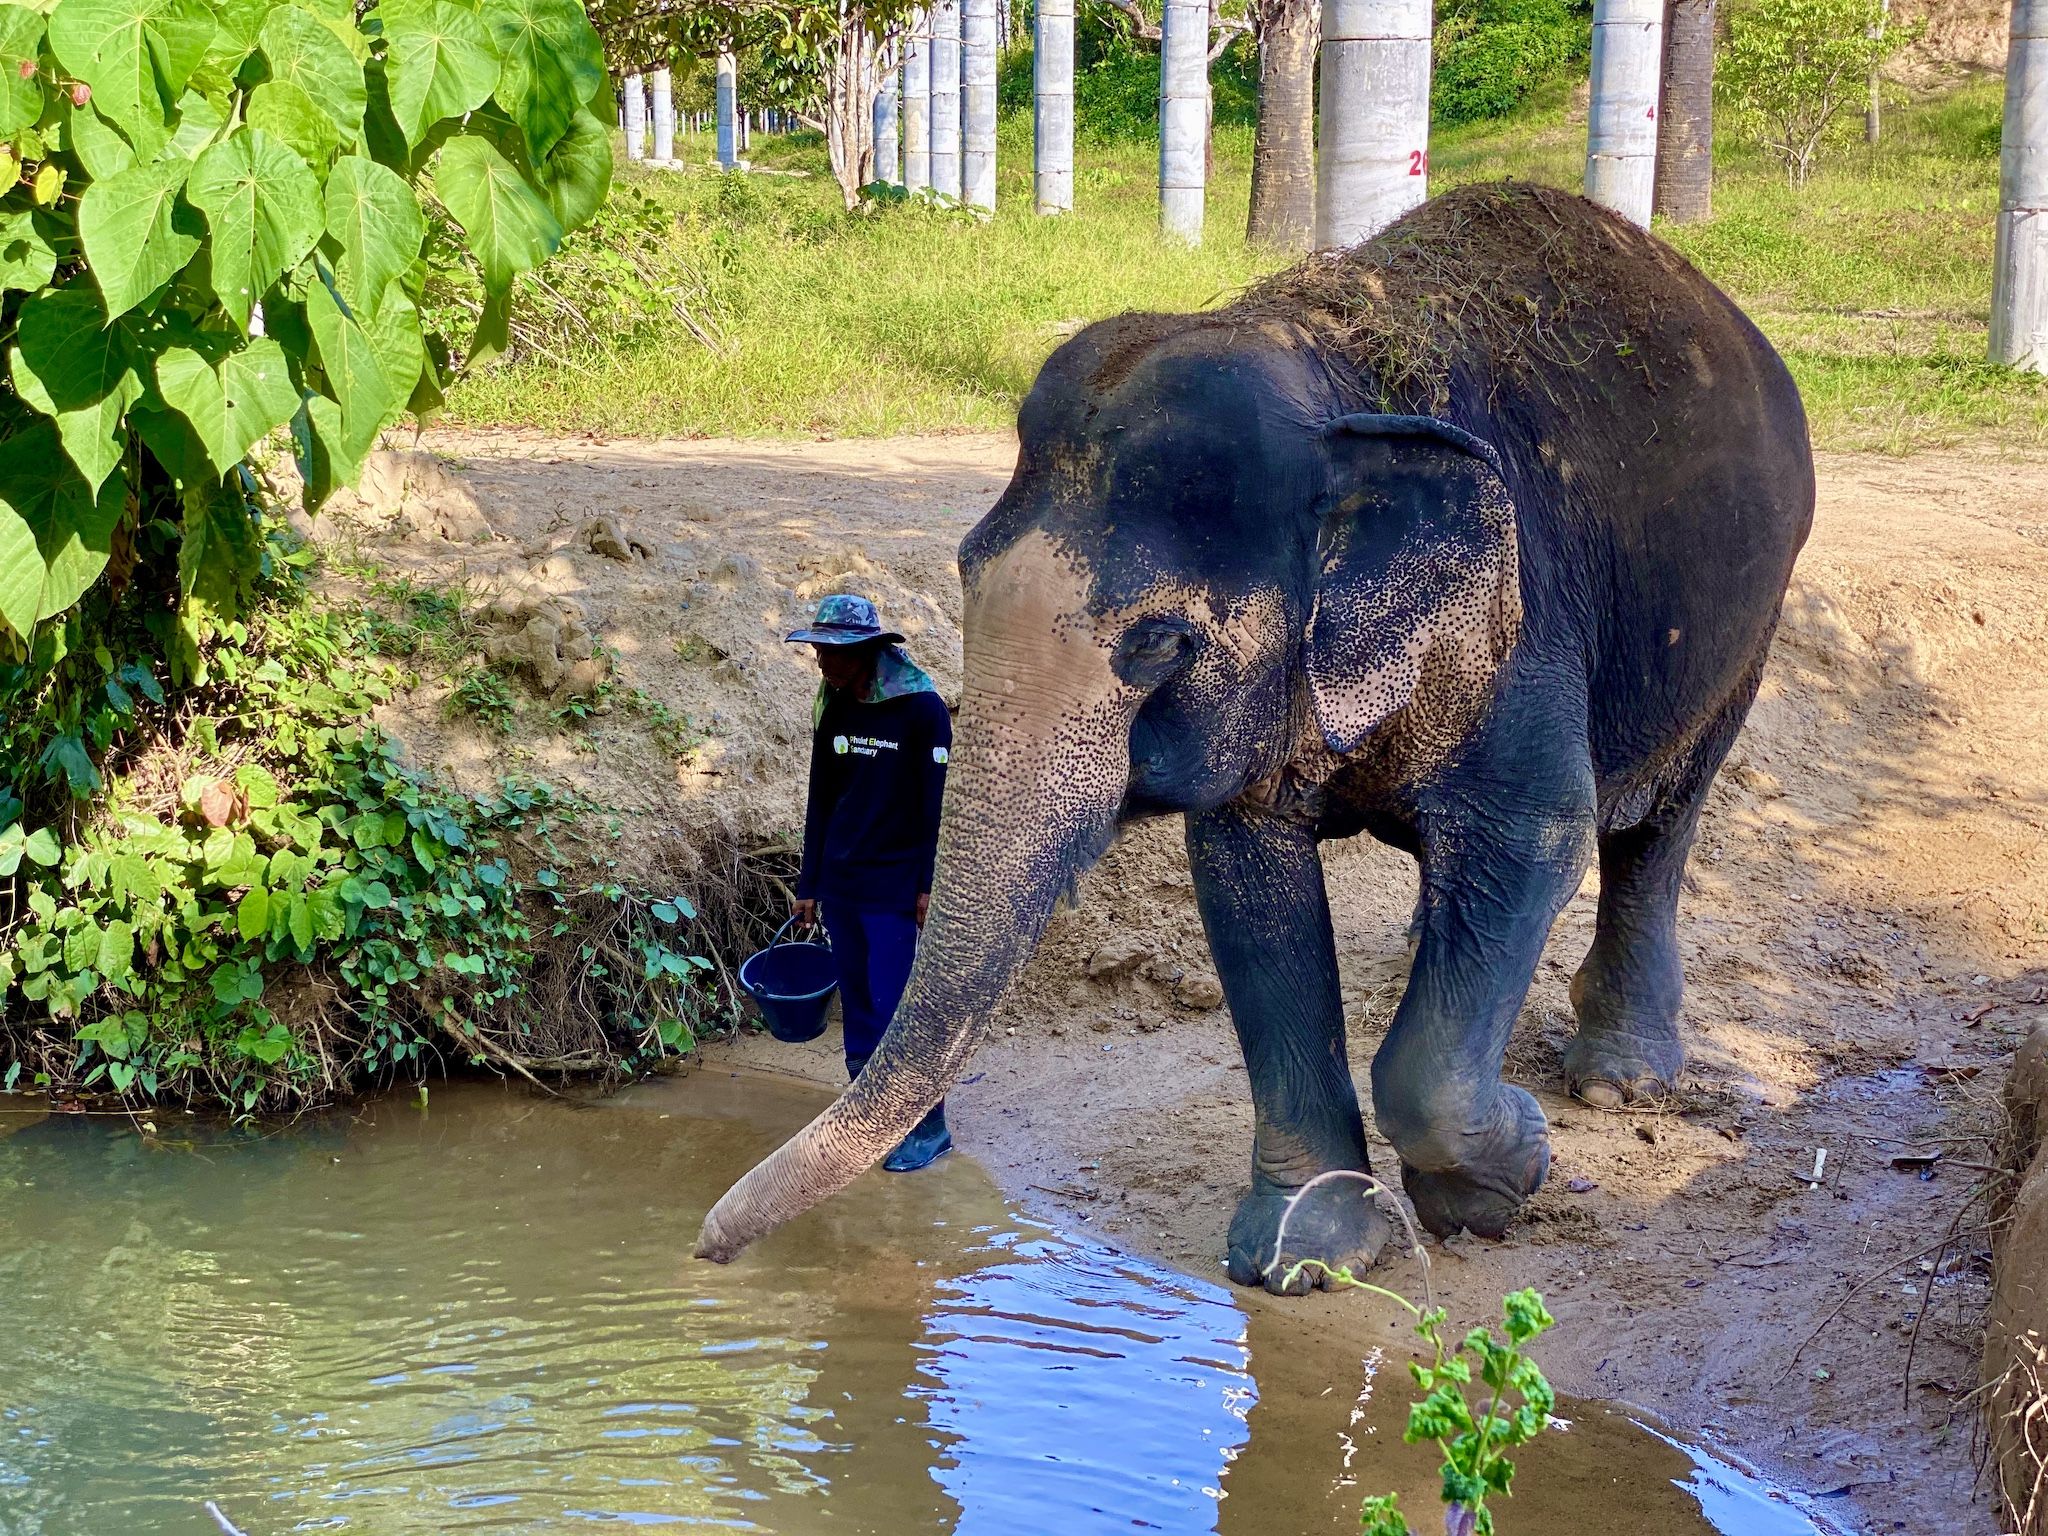 The battered elephants are medically cared for and lovingly cared for in the Phuket Elephant Sanctuary. Photo: Sascha Tegtmeyer